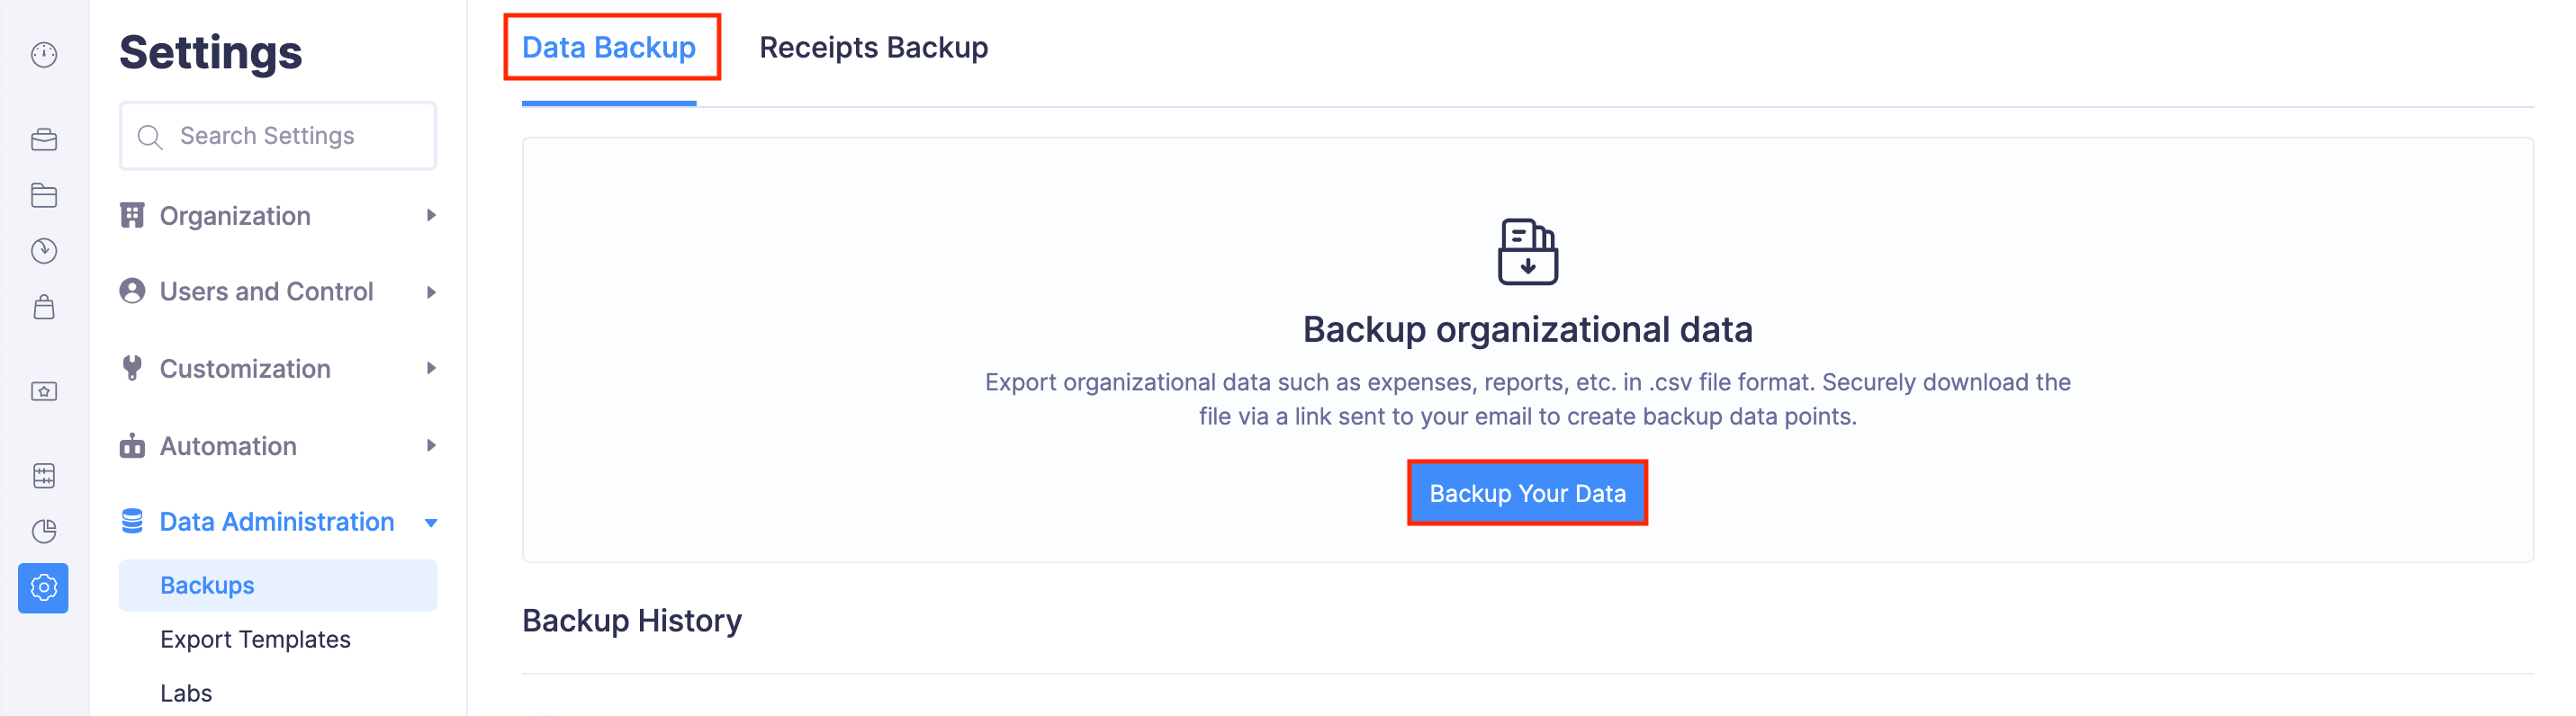 Backup Organizational Data